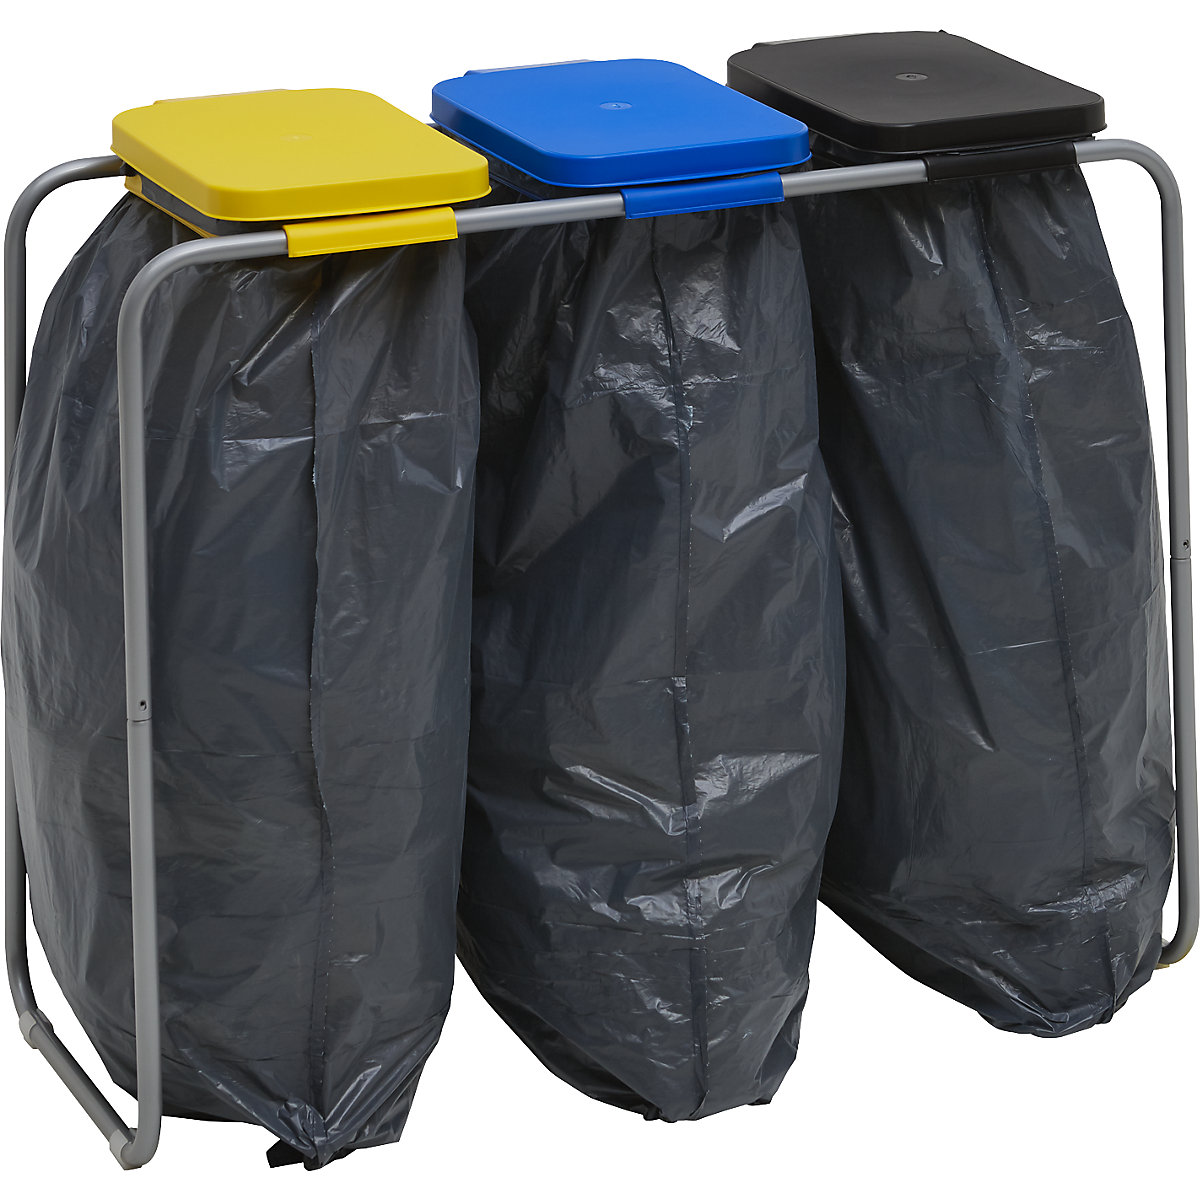 Porta-sacchi per rifiuti – eurokraft basic: per capacità max. 3 x 120 l,  telaio fisso